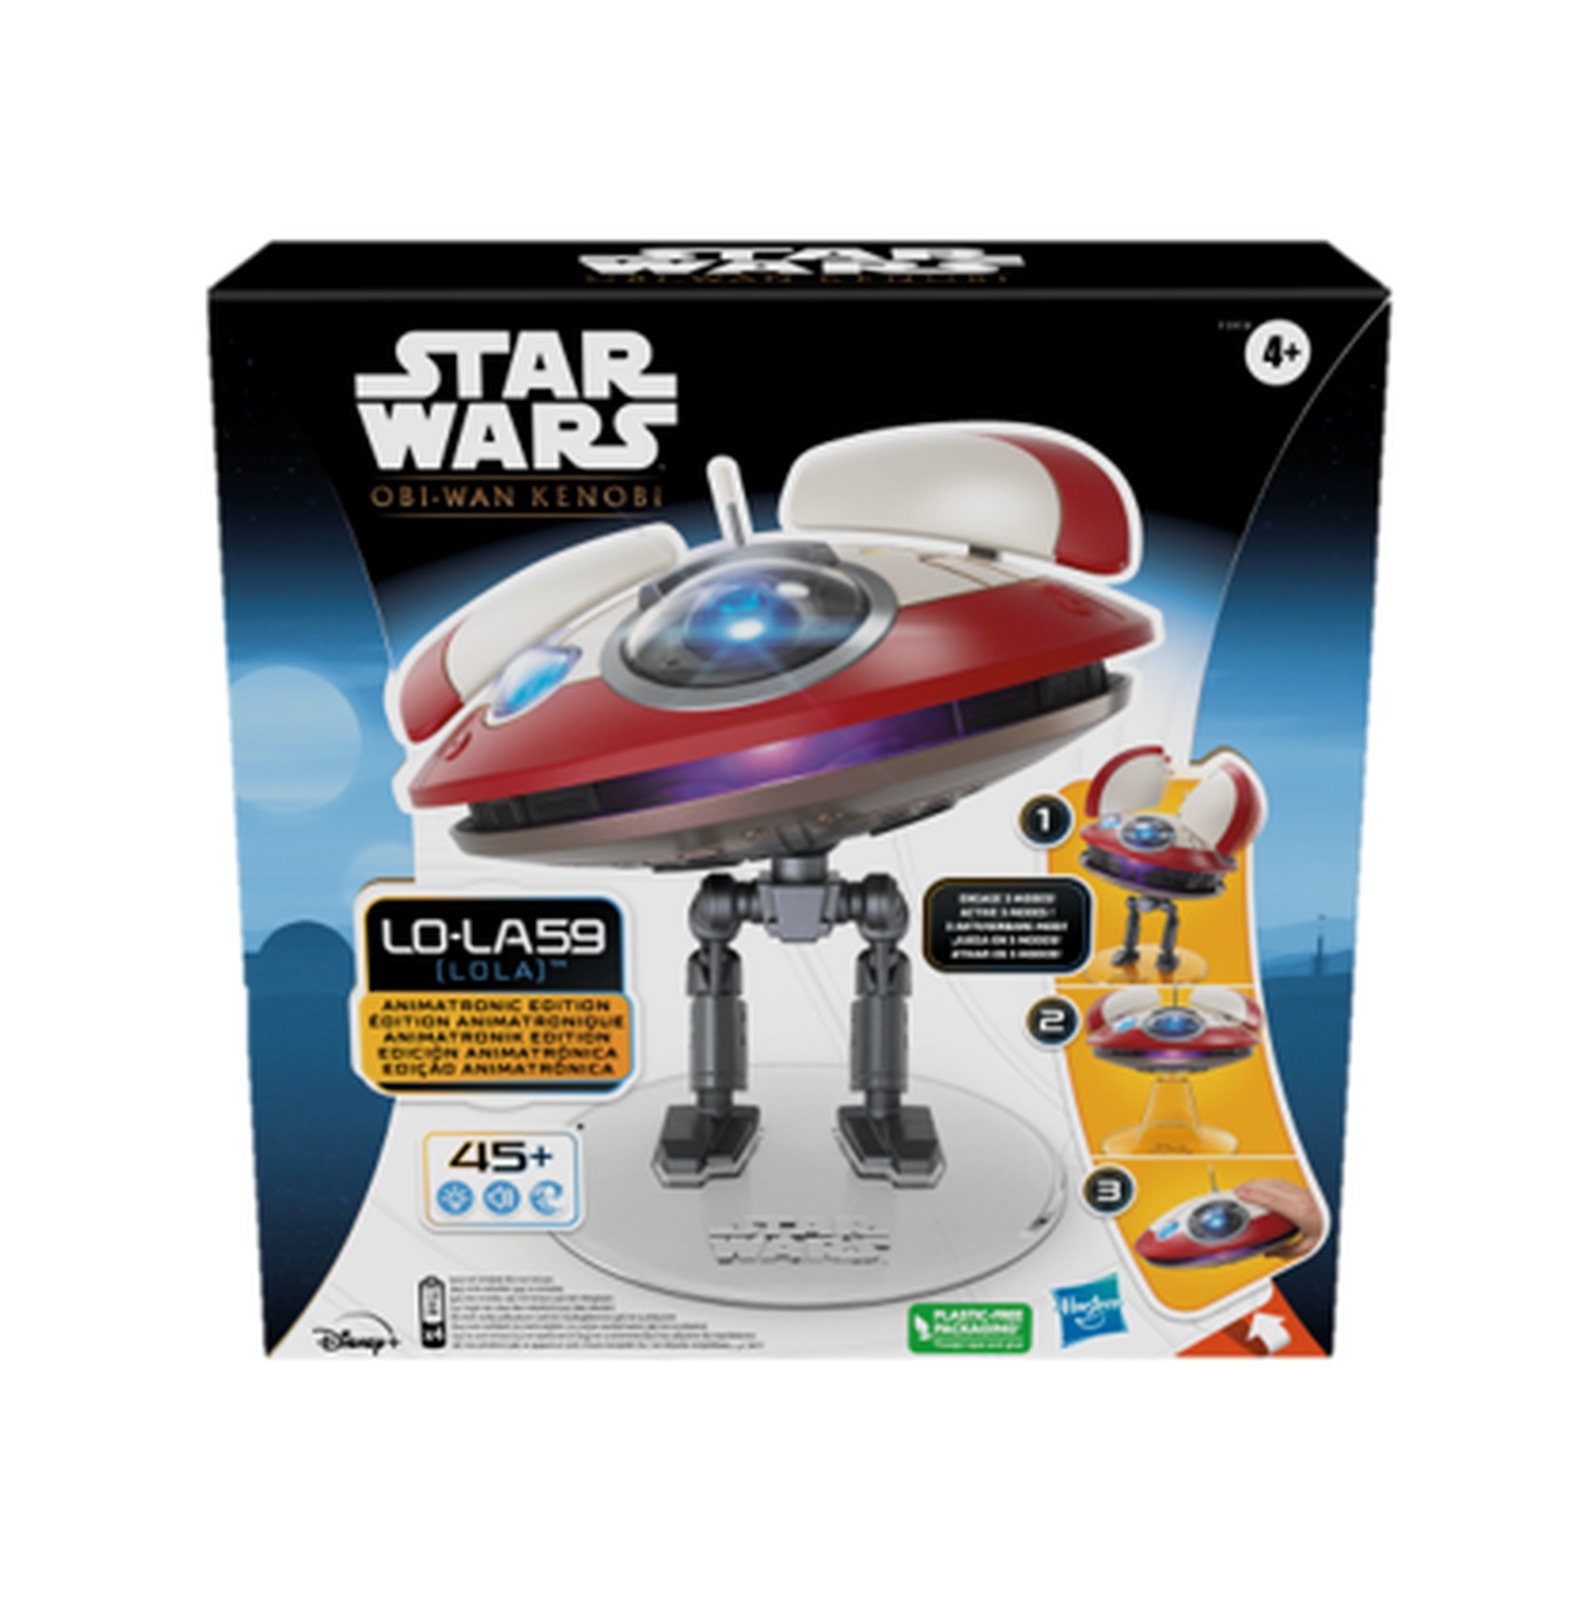 Star wars, l0-la59 (lola) animatronic edition, droide elettronico ispirato alla serie "obi-wan kenobi" - Star Wars